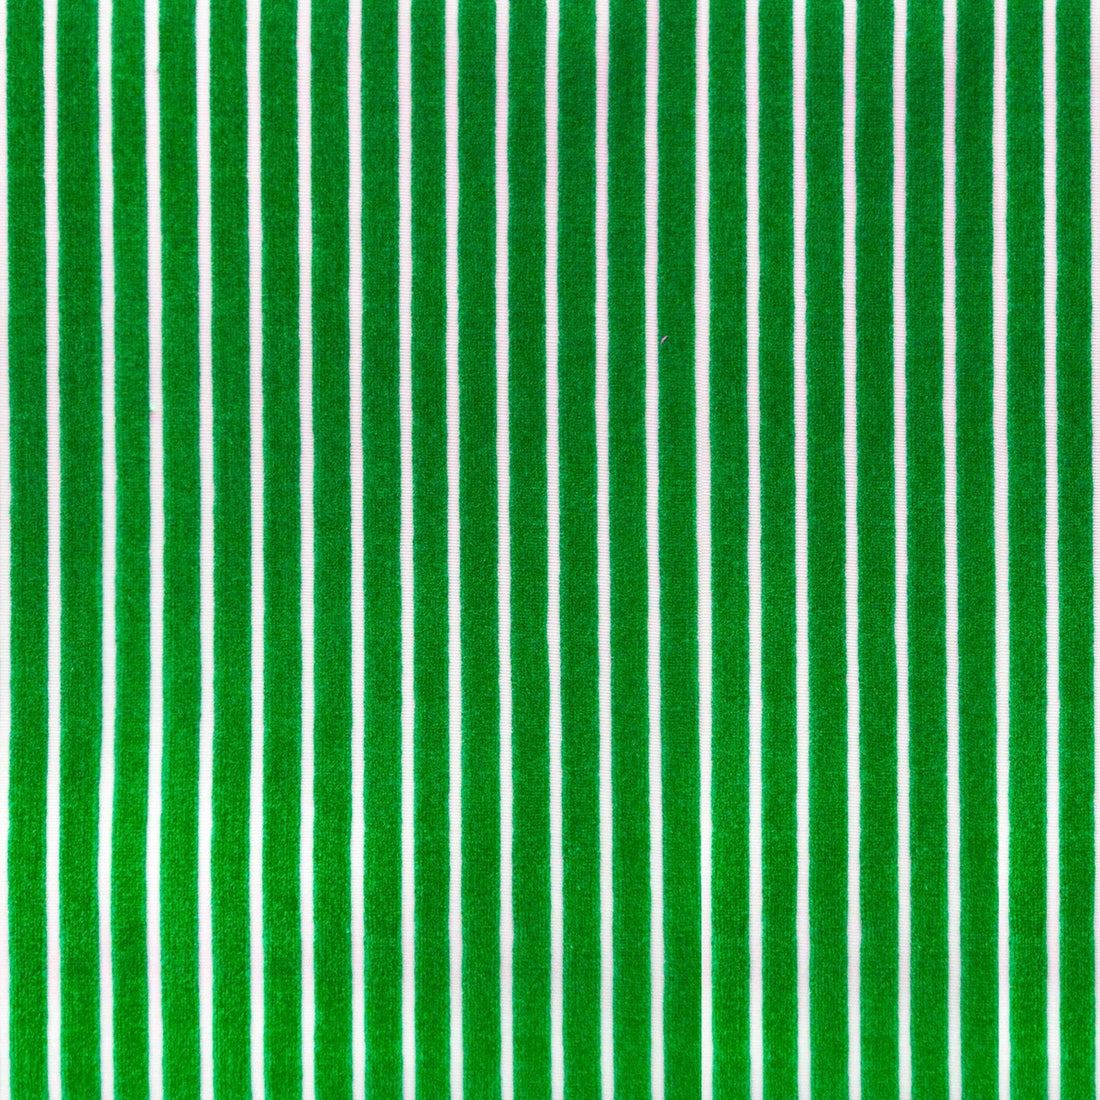 Mayrit fabric in verde billar color - pattern LCT1111.014.0 - by Gaston y Daniela in the Lorenzo Castillo IX Hesperia collection